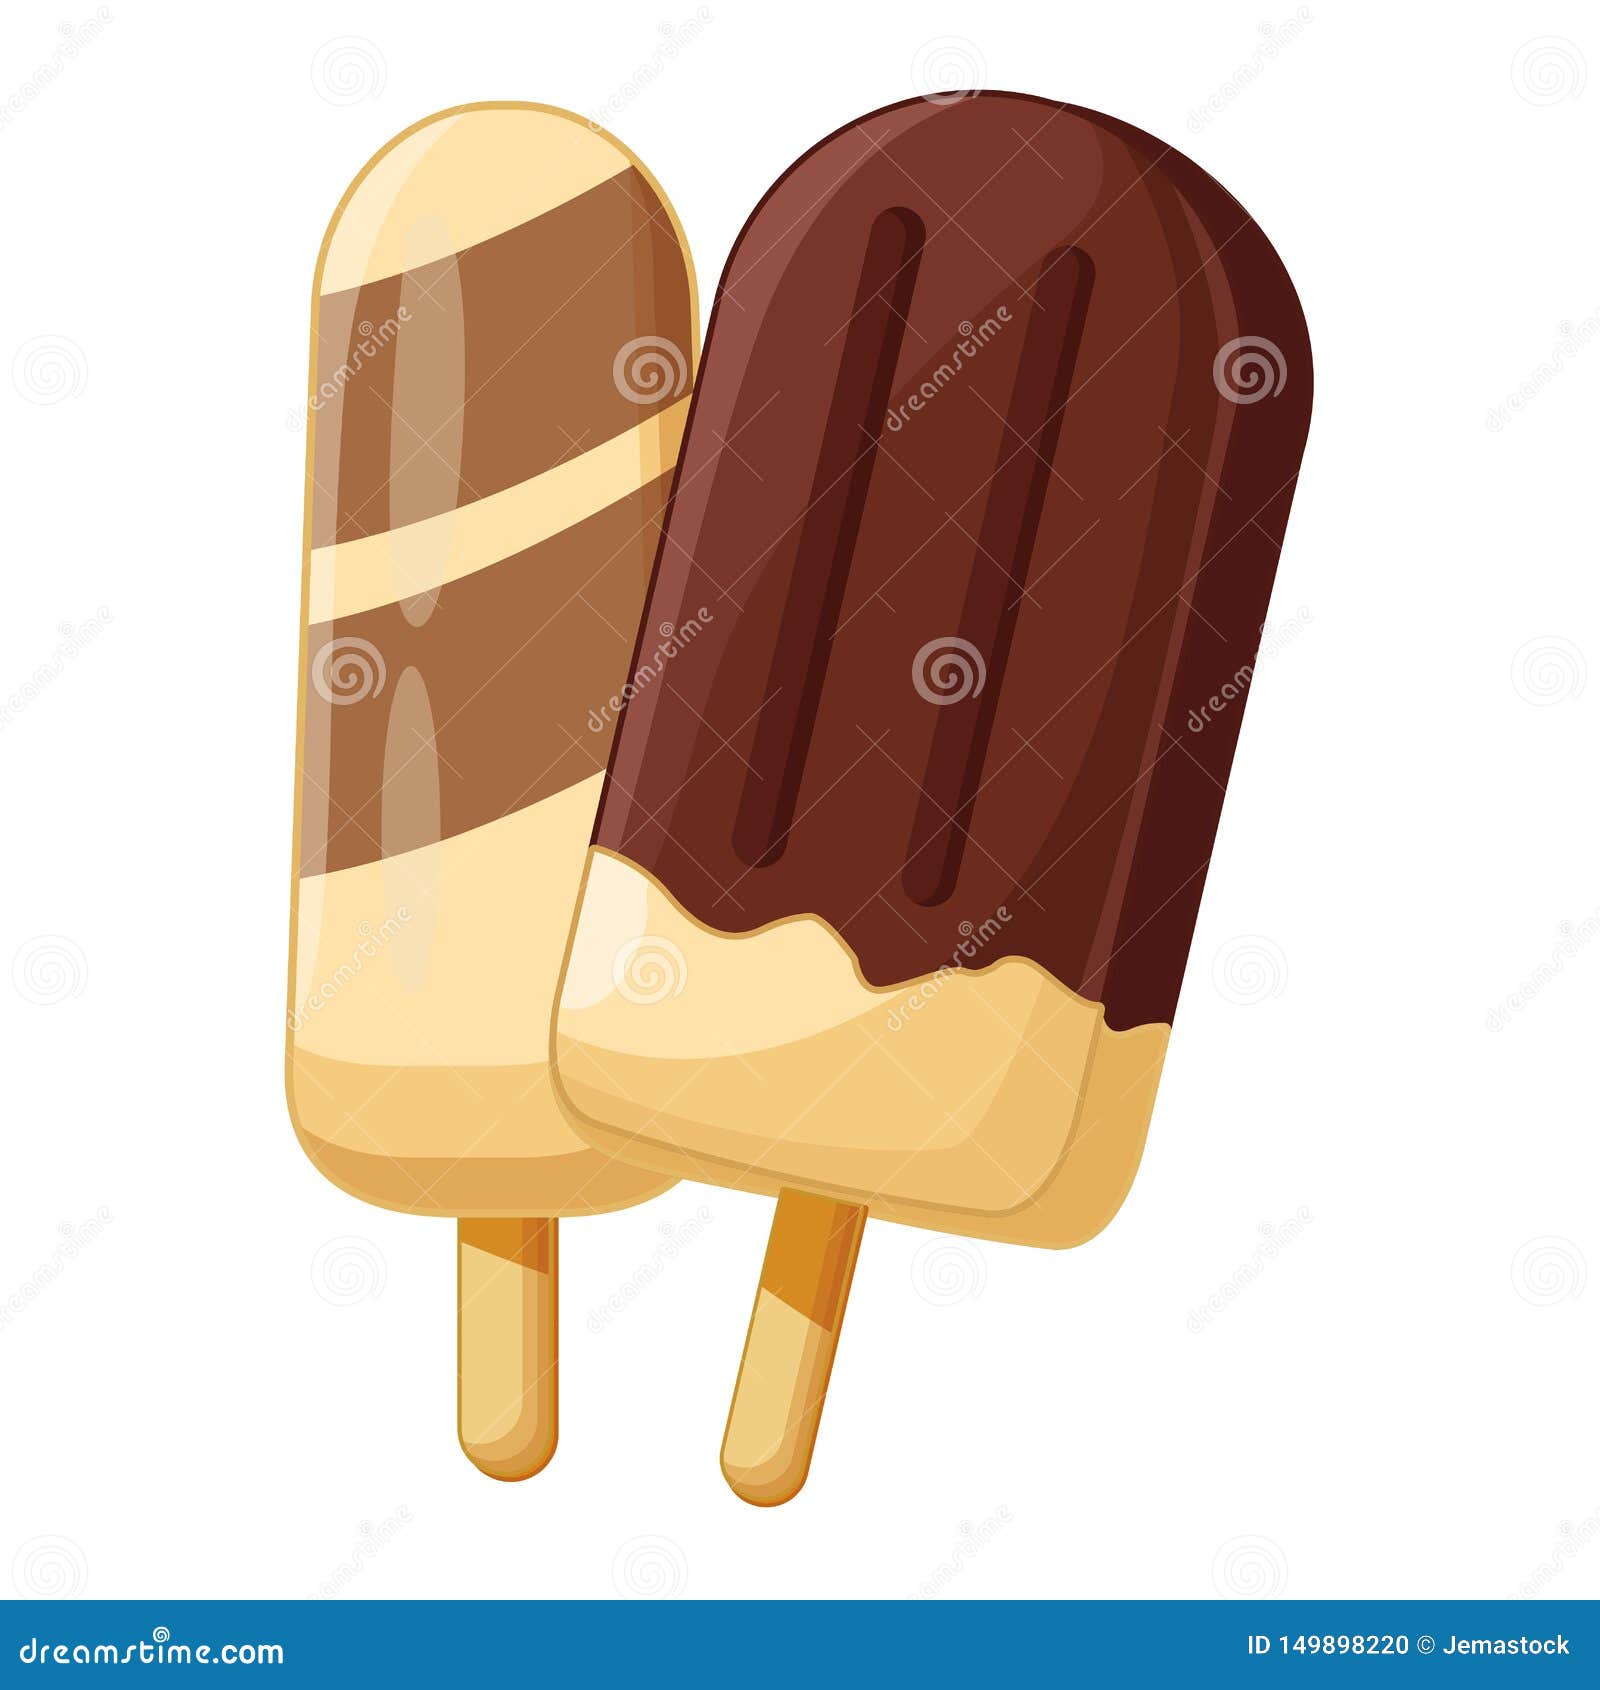 delicious popsicle ice creams cartoons